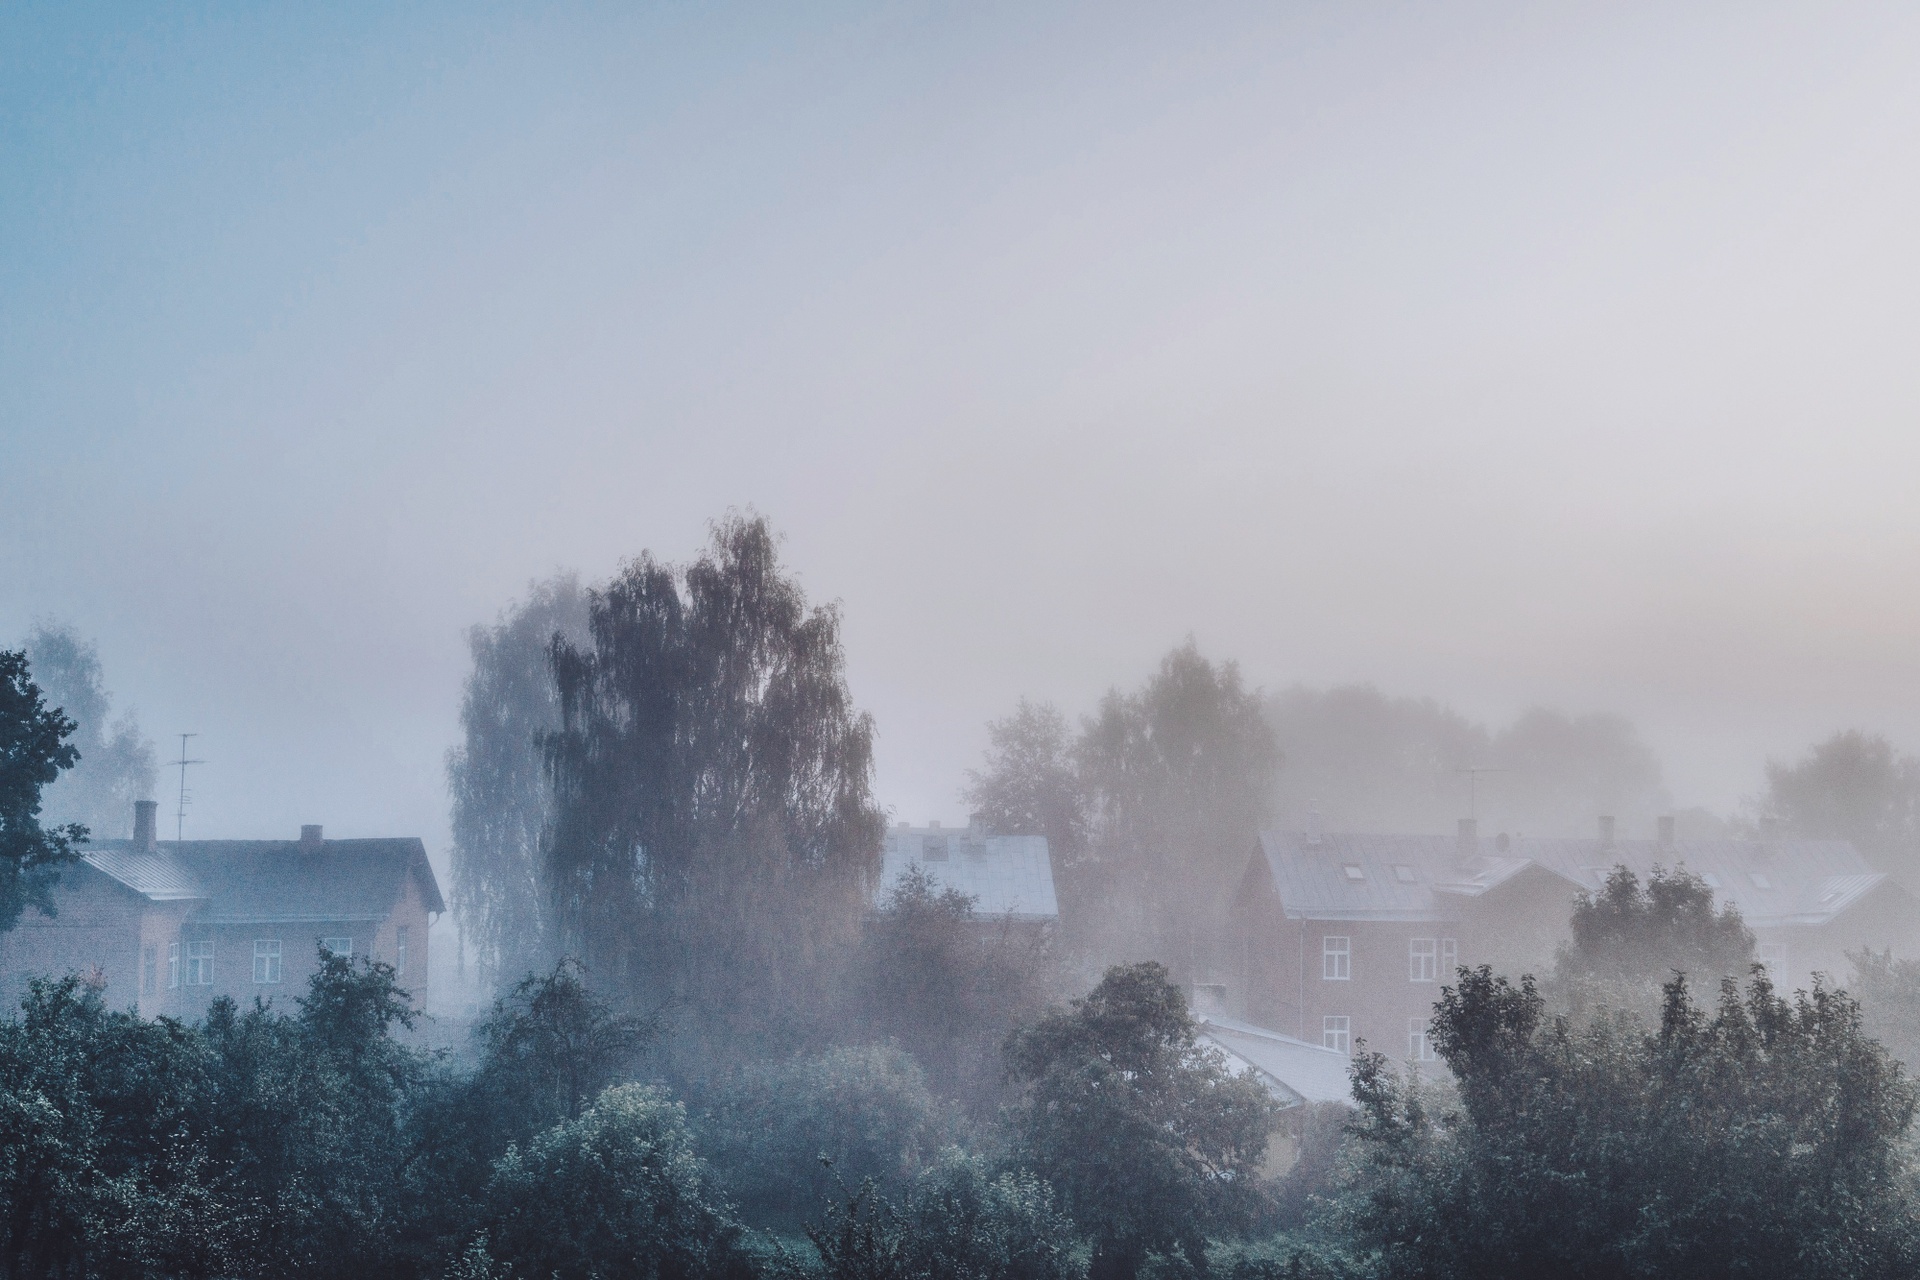 Foggy weather during autumn in Estonia